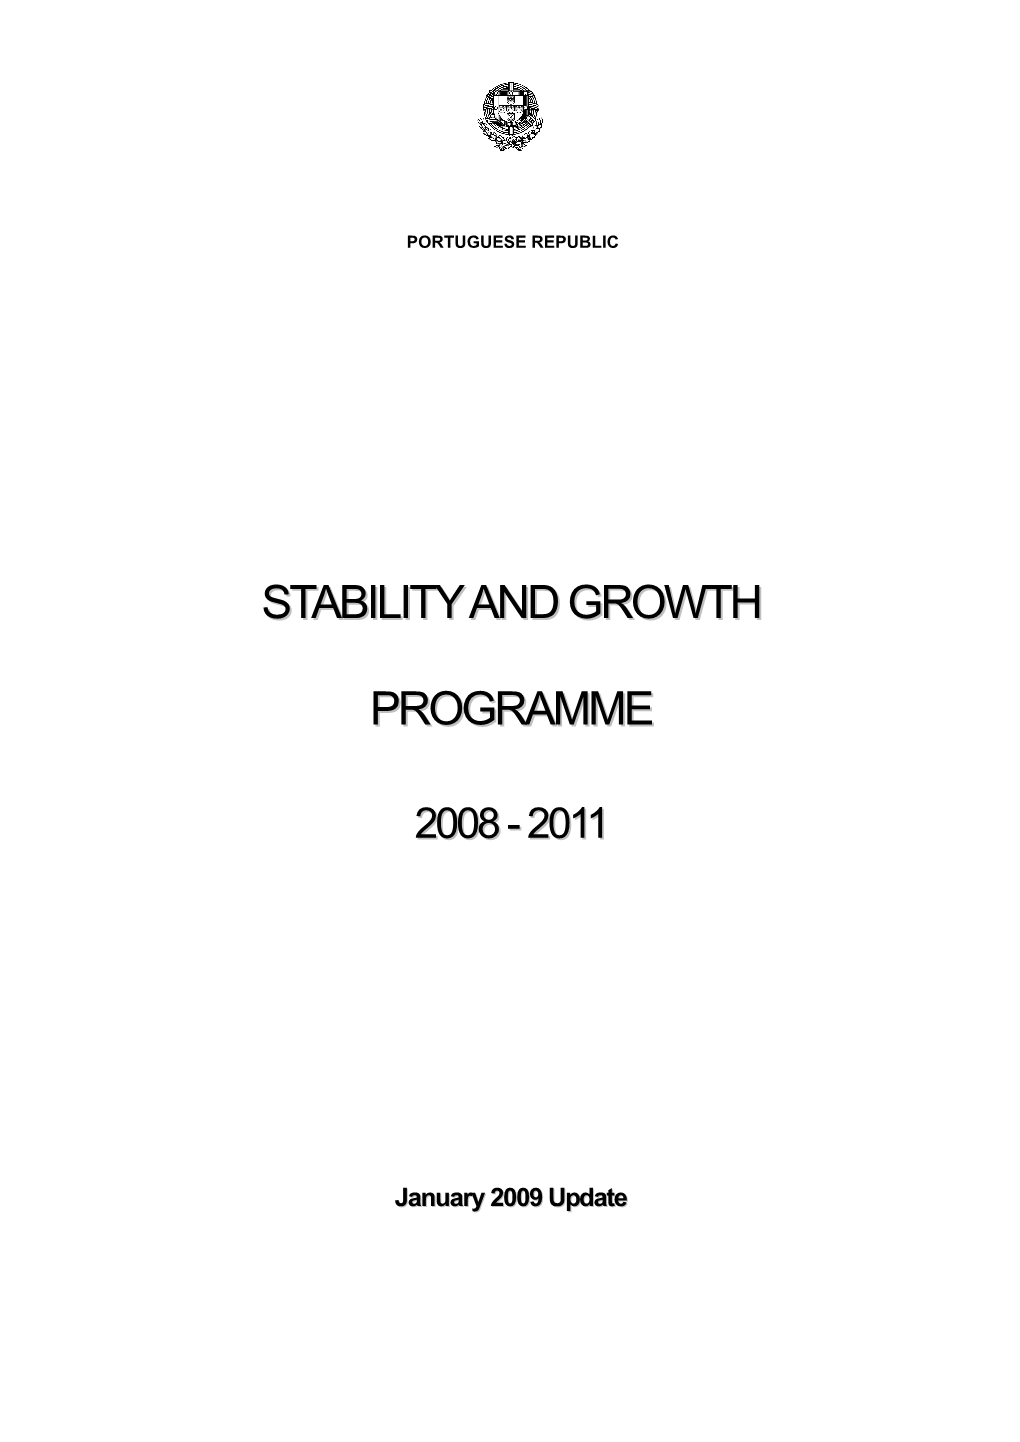 Stabilityandgrowth Programme